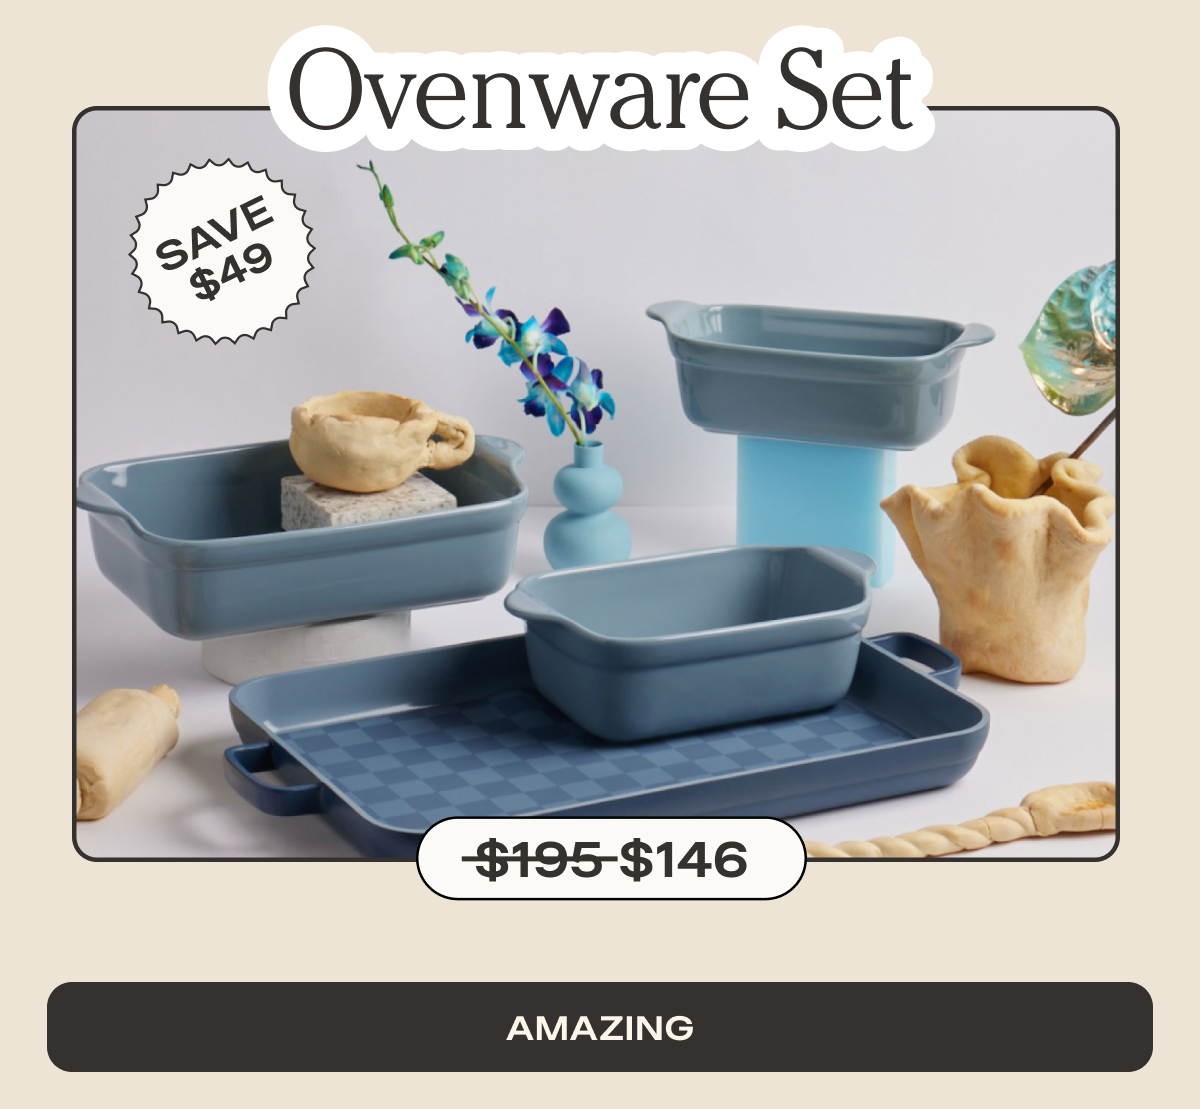 Ovenware Set - Amazing